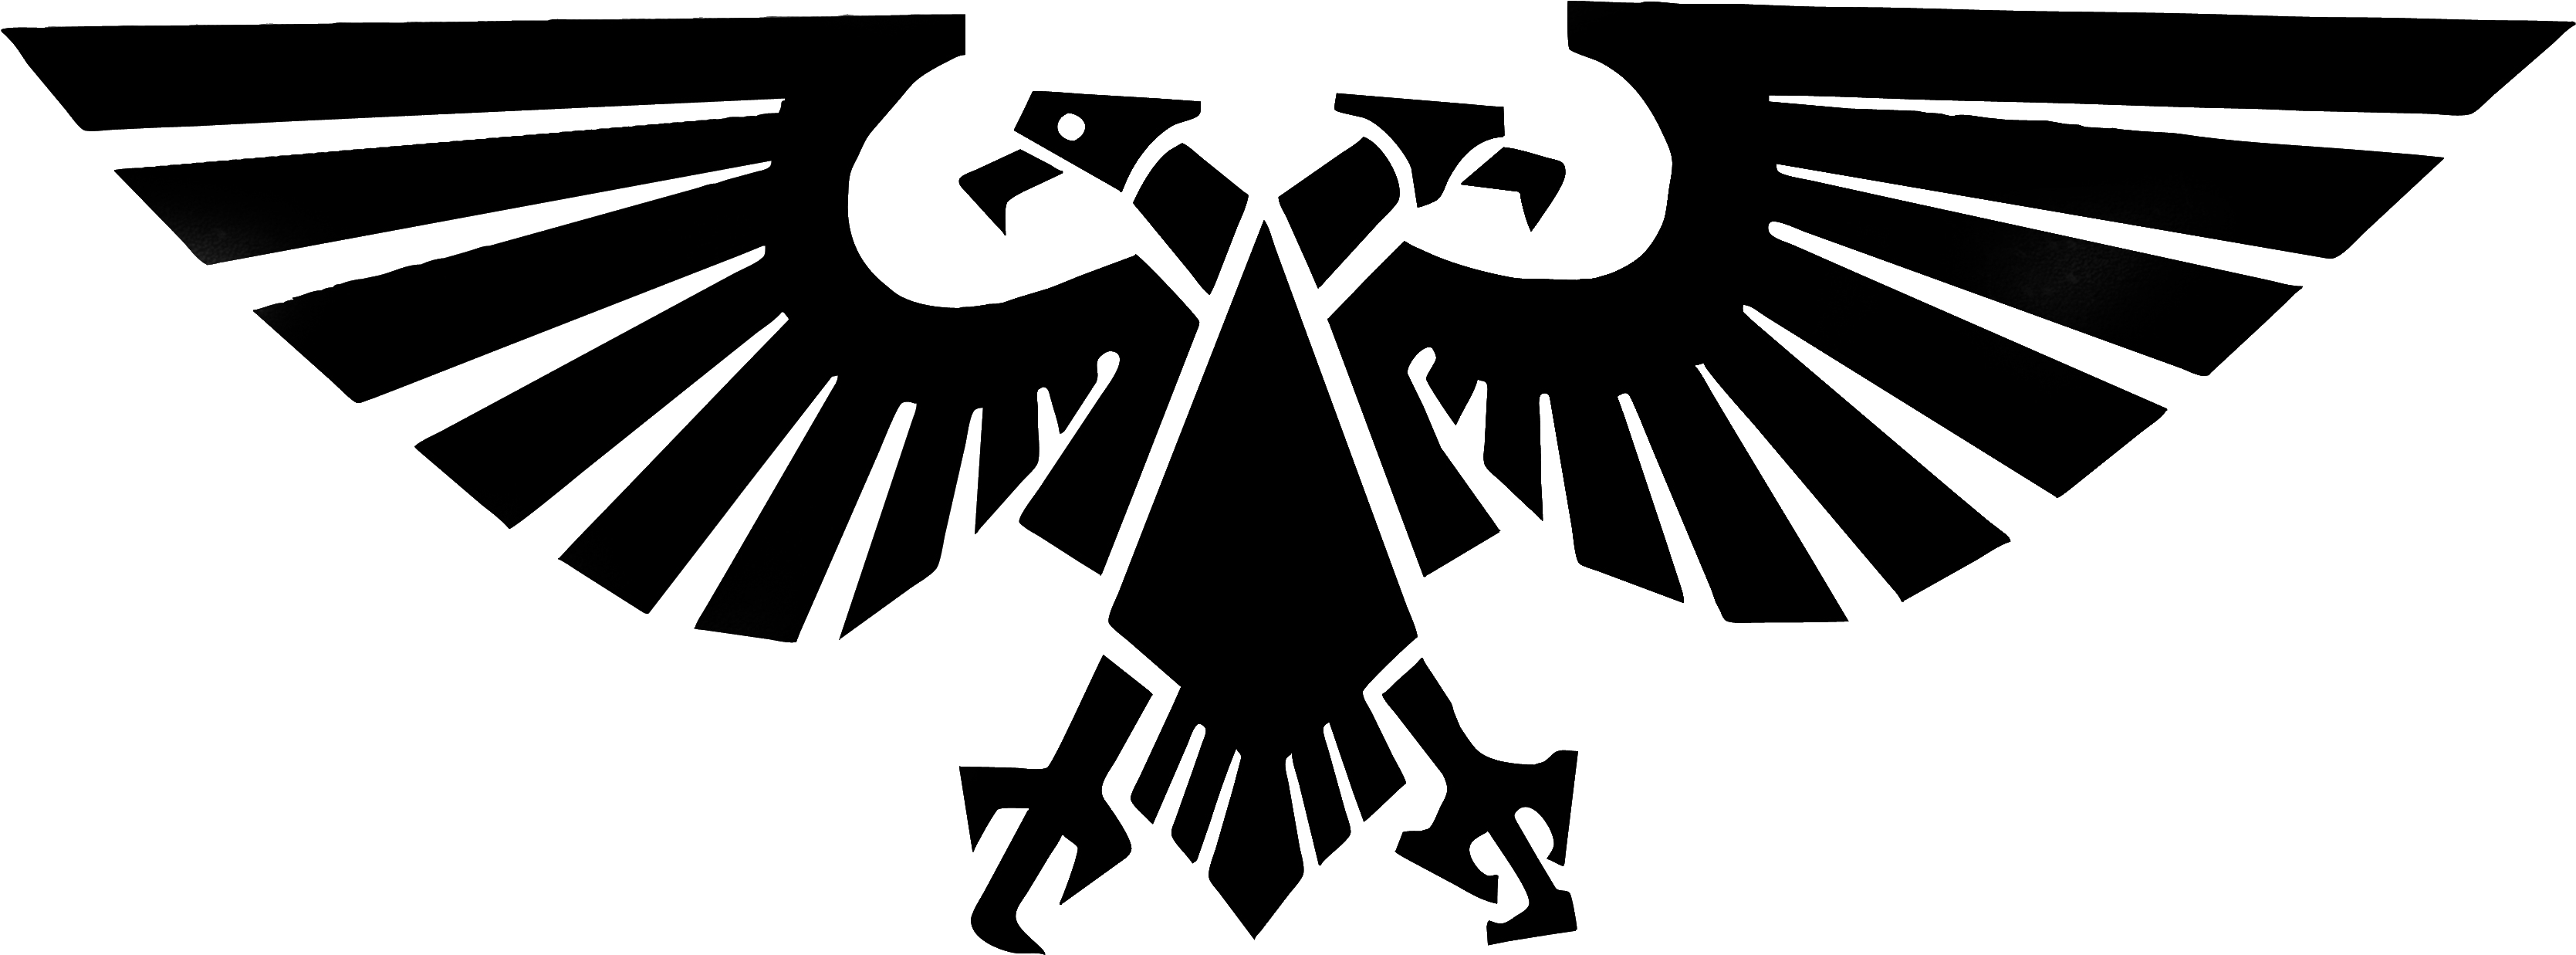 Eagle Black Logo Png Image Free Download Warhammer